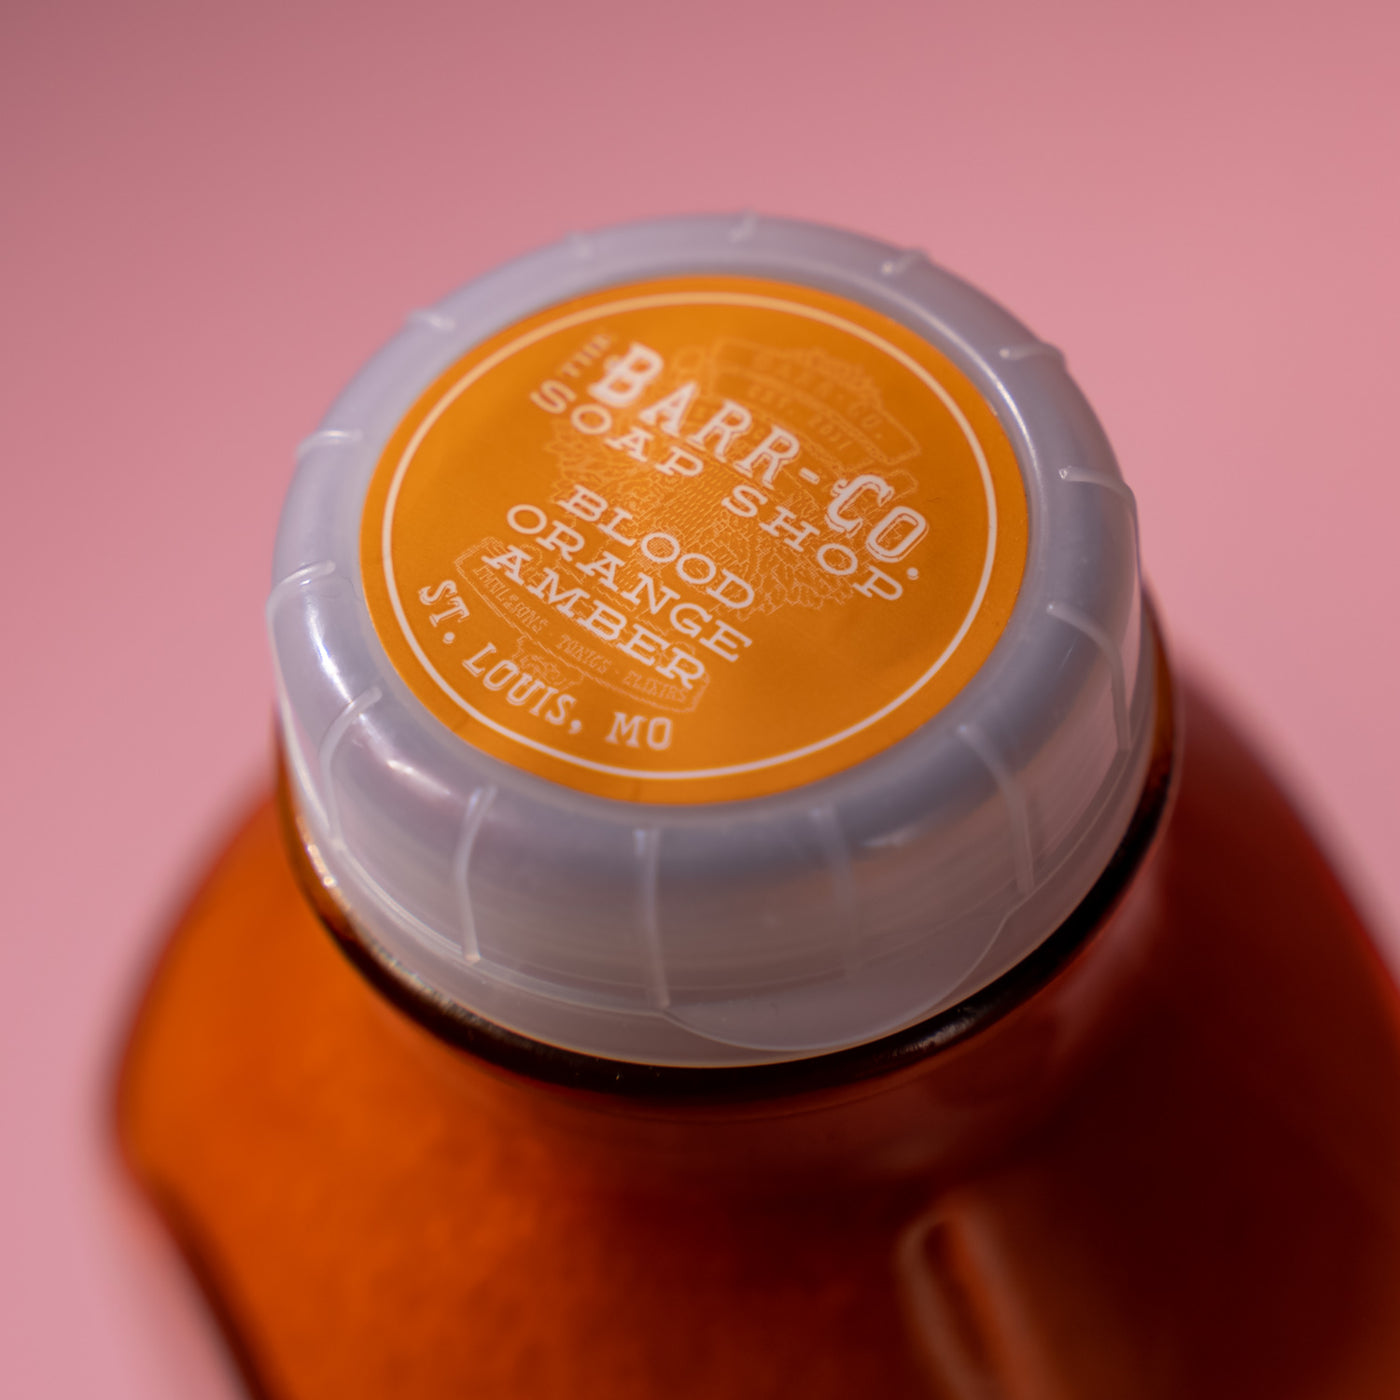 Barr-Co. Blood Orange Amber Bath Soak